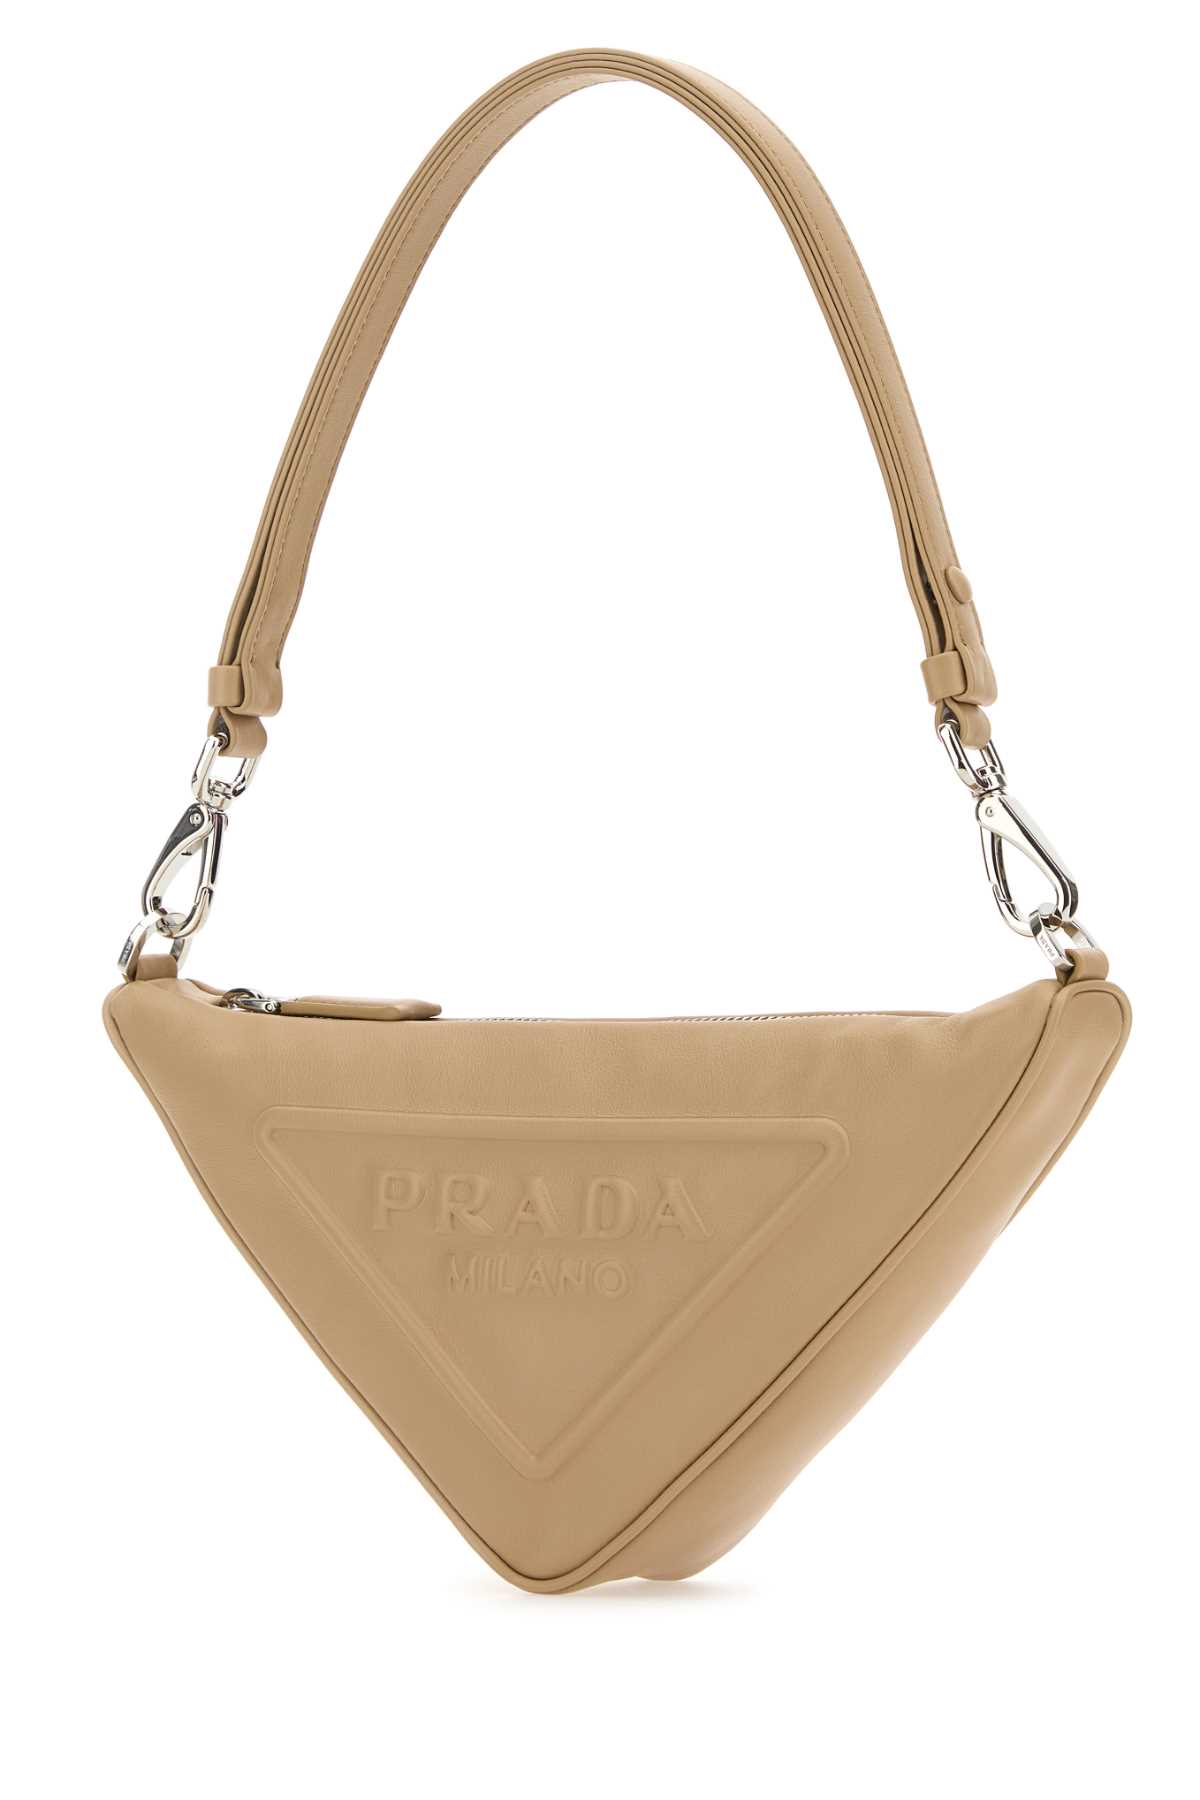 Prada Sand Leather  Triangle Shoulder Bag In Sabbia